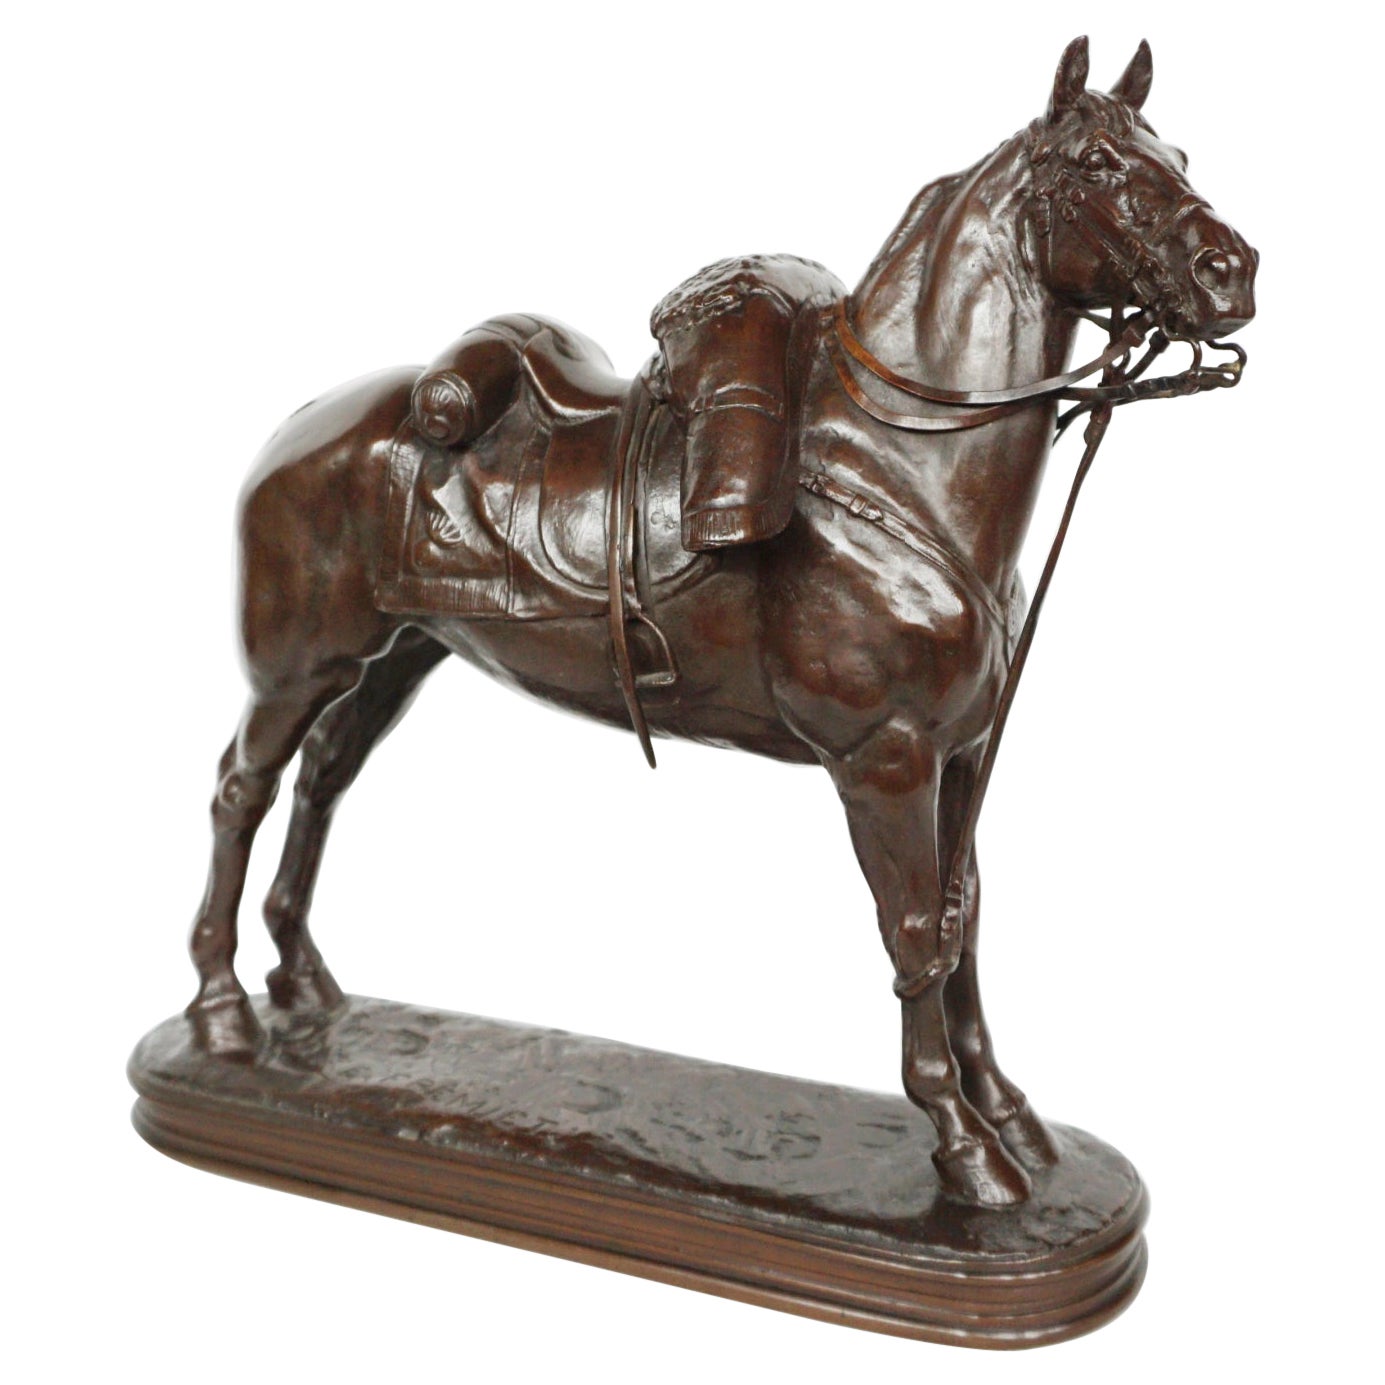 Emmanuel Fremiet 'War Horse' Bronze Sculpture, French, Circa 1860